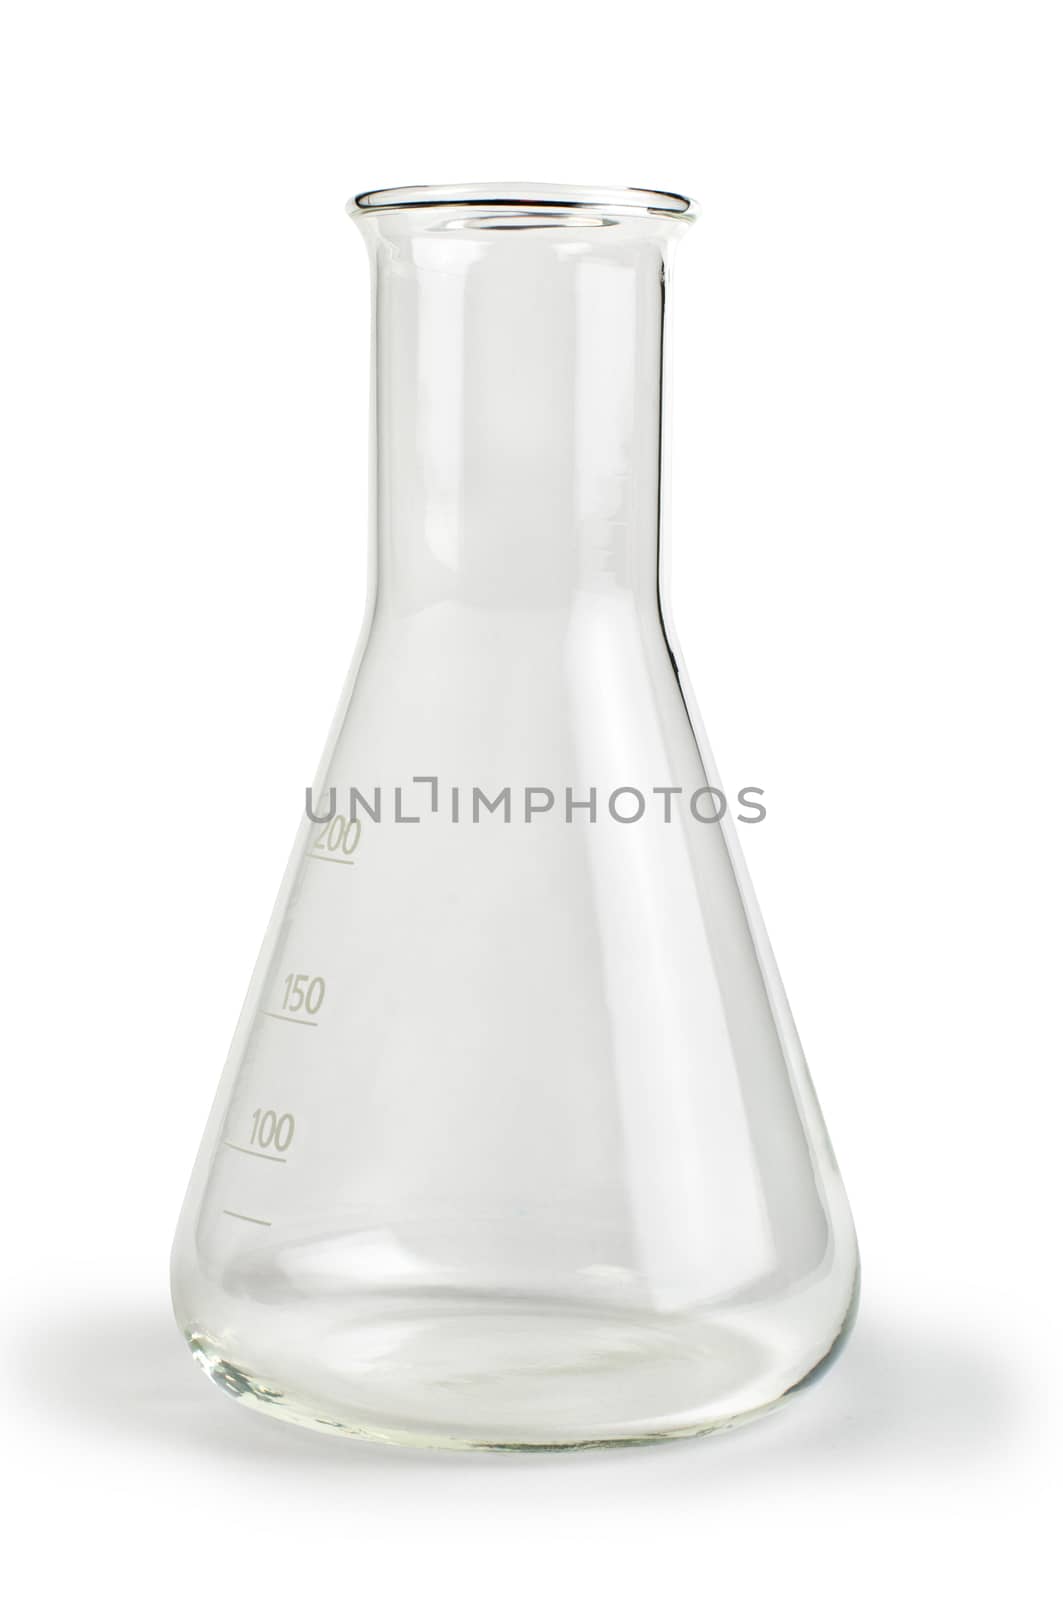 Empty glass laboratory utensils.Laboratory beakers on white background